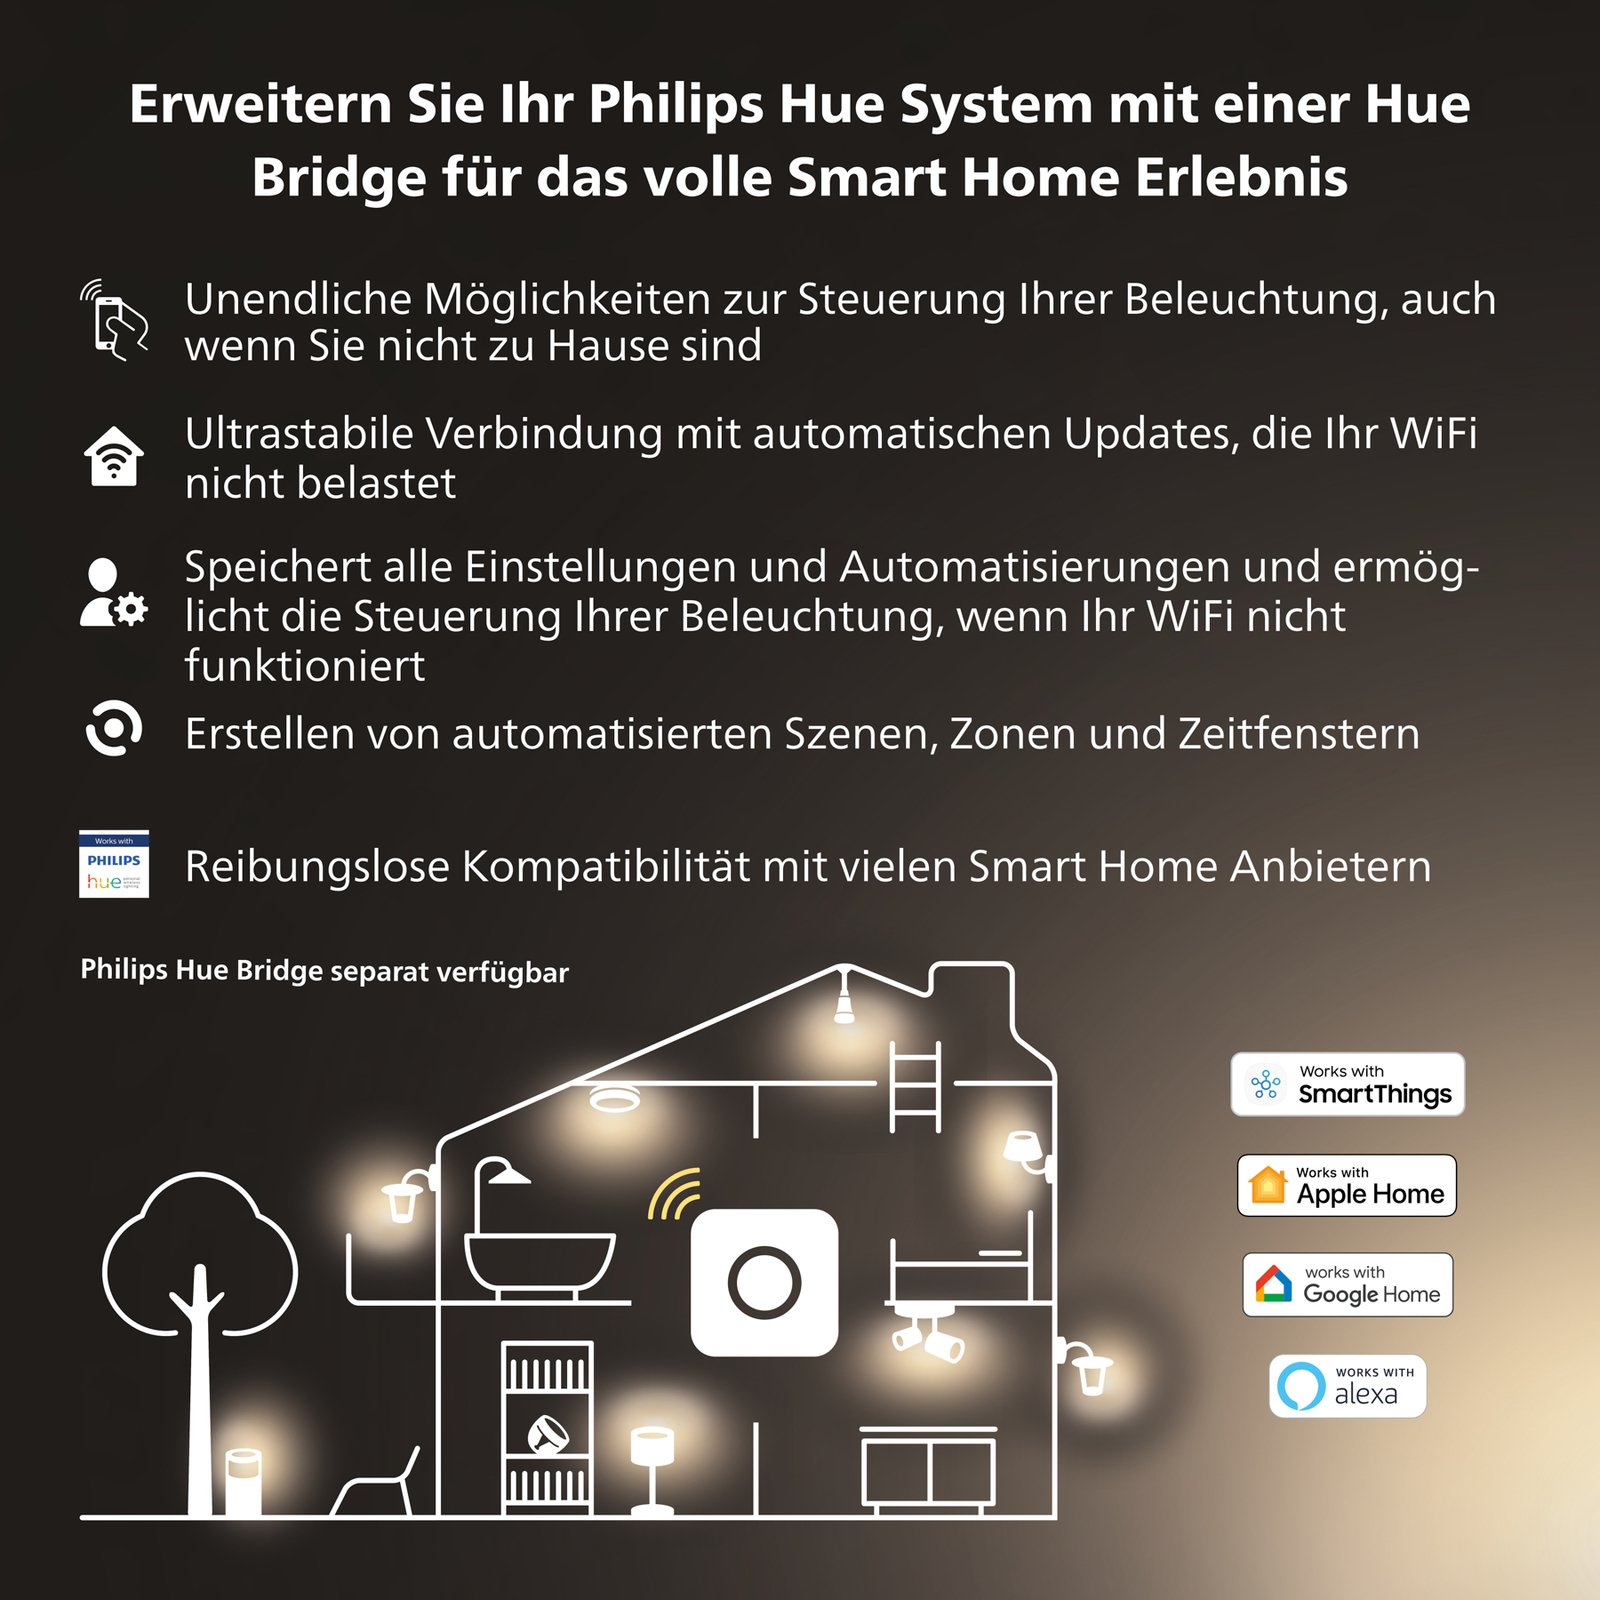 Philips Hue White Ambiance E27 15W LED-Lampe